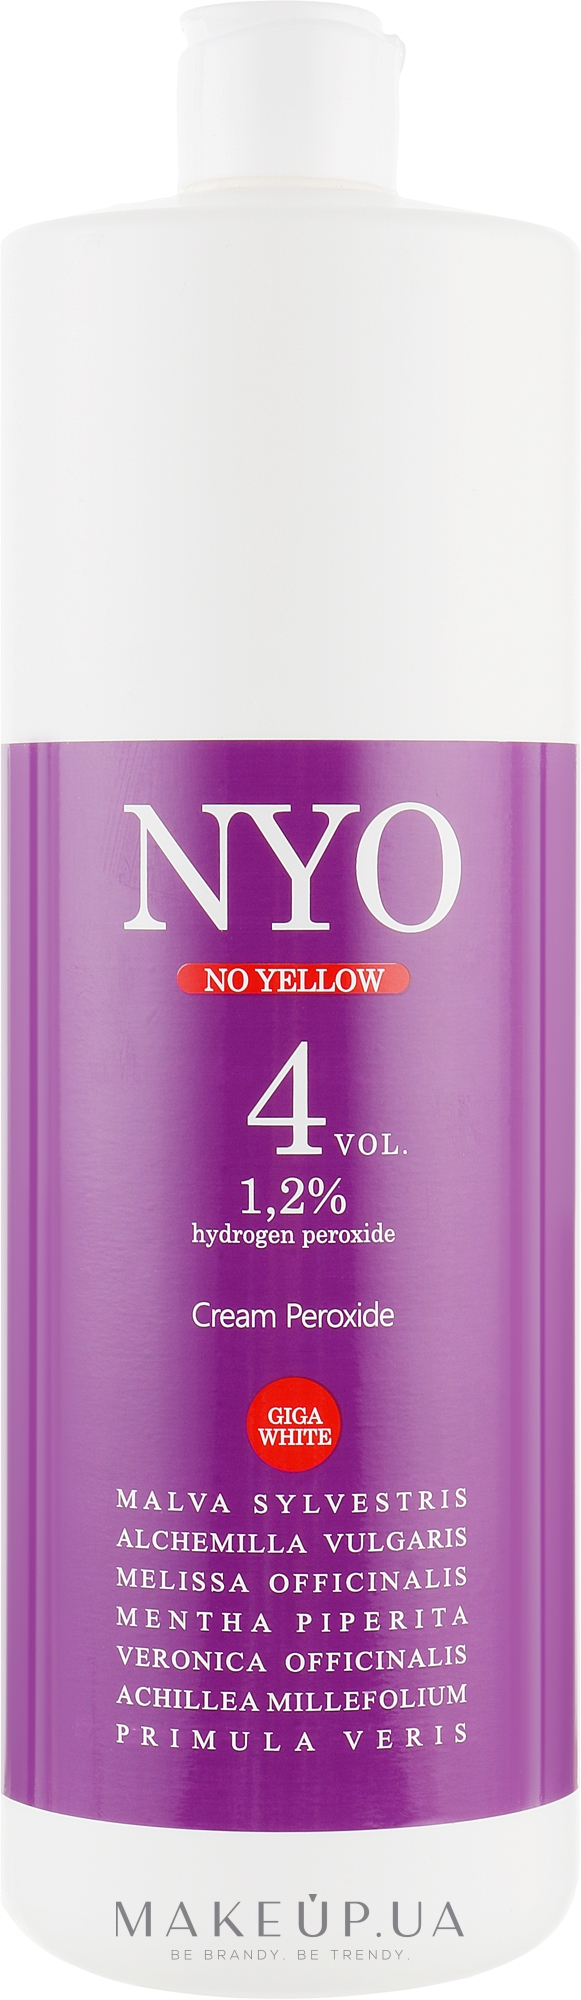 Крем-окислитель для волос 1.2% - Faipa Roma Nyo Cream Peroxide — фото 1000ml